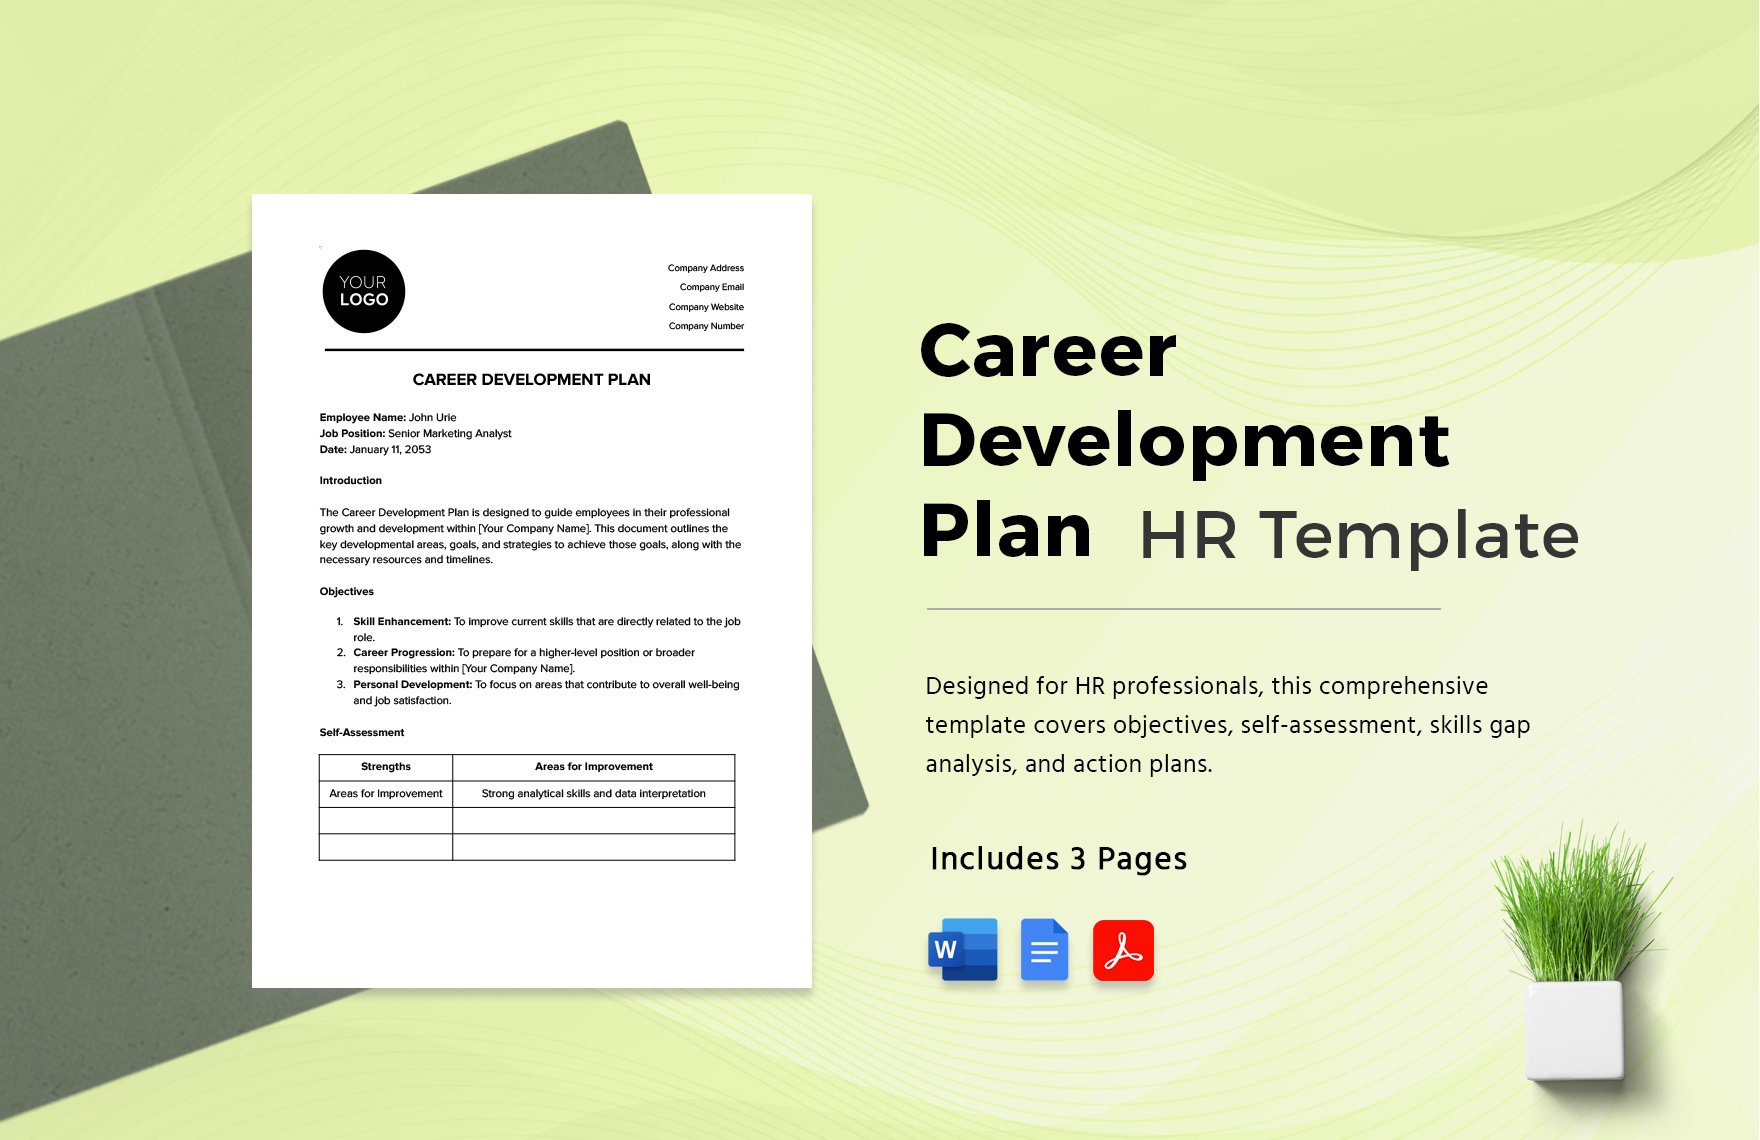 Career Development Plan HR Template